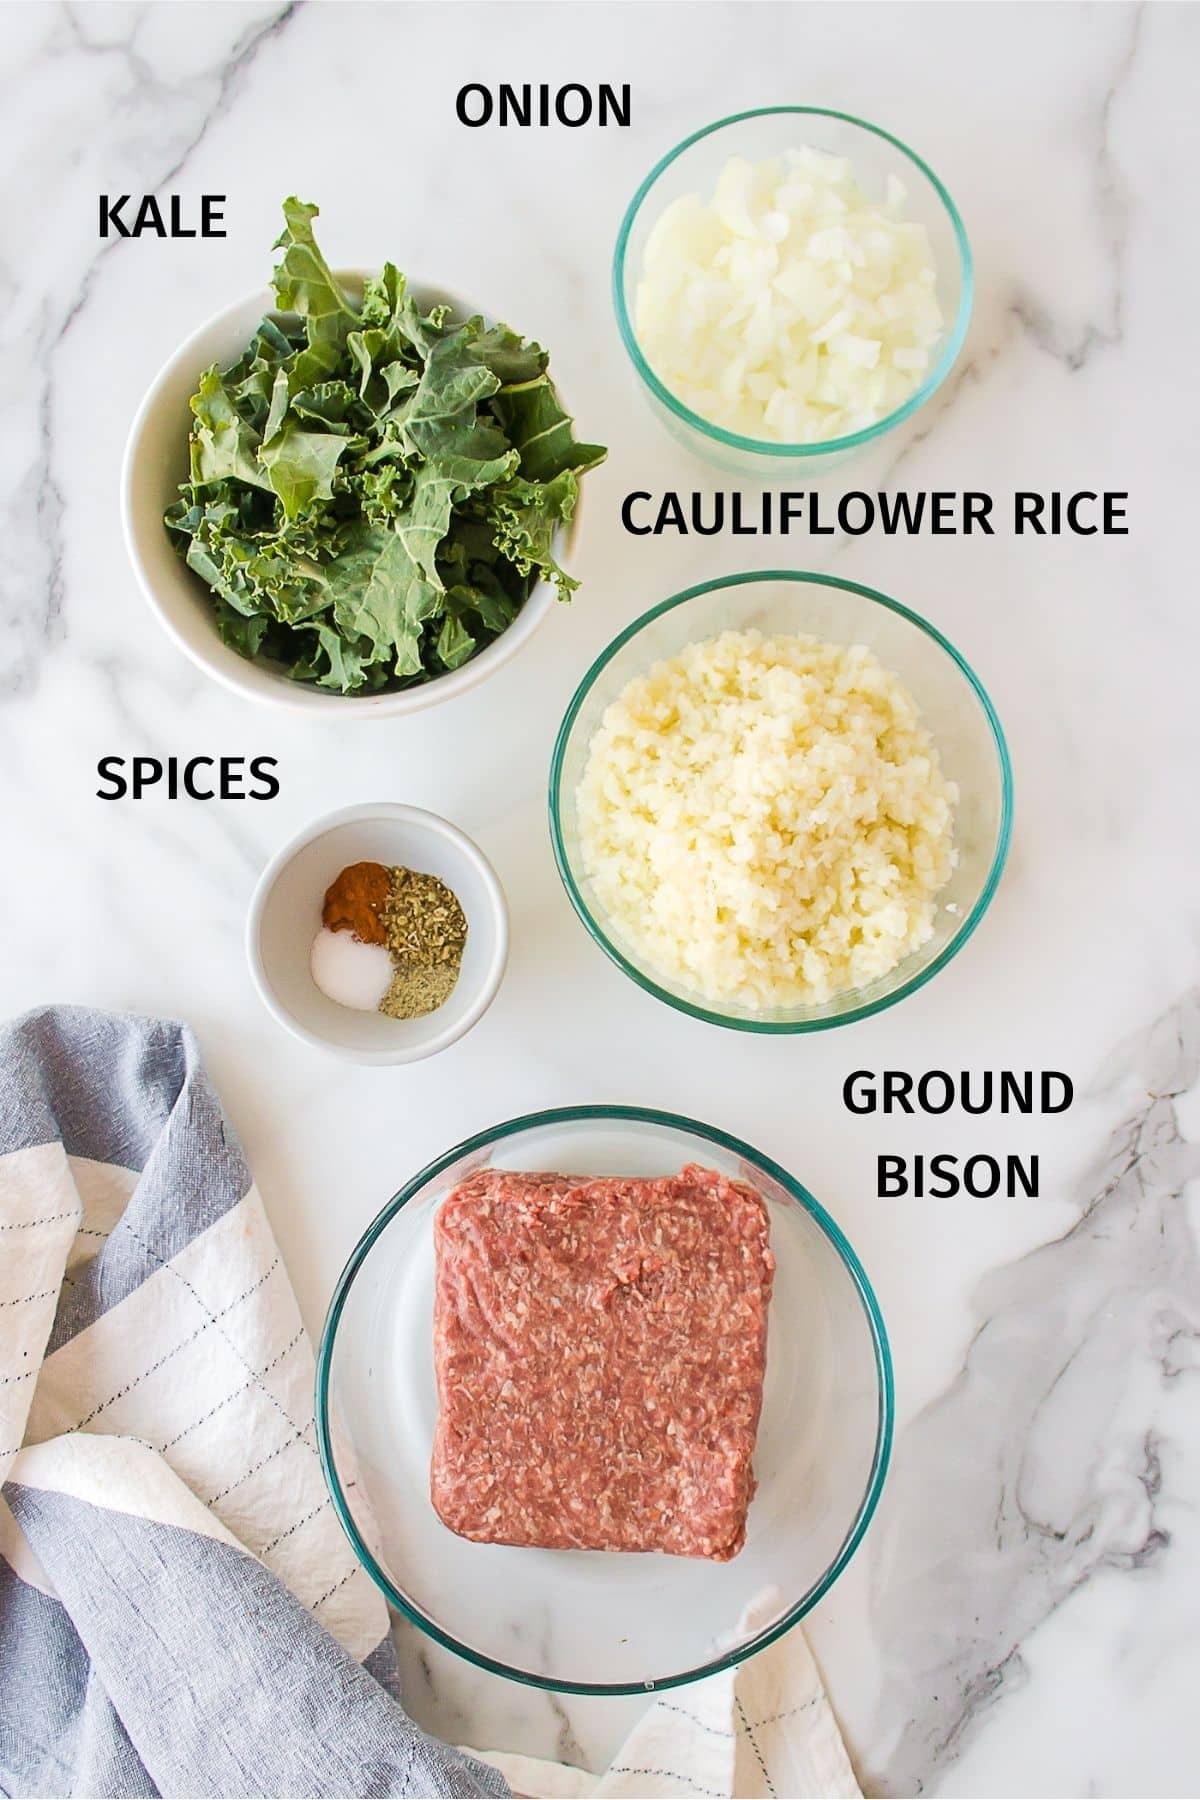 ingredients for ground bison and cauliflower bowl.